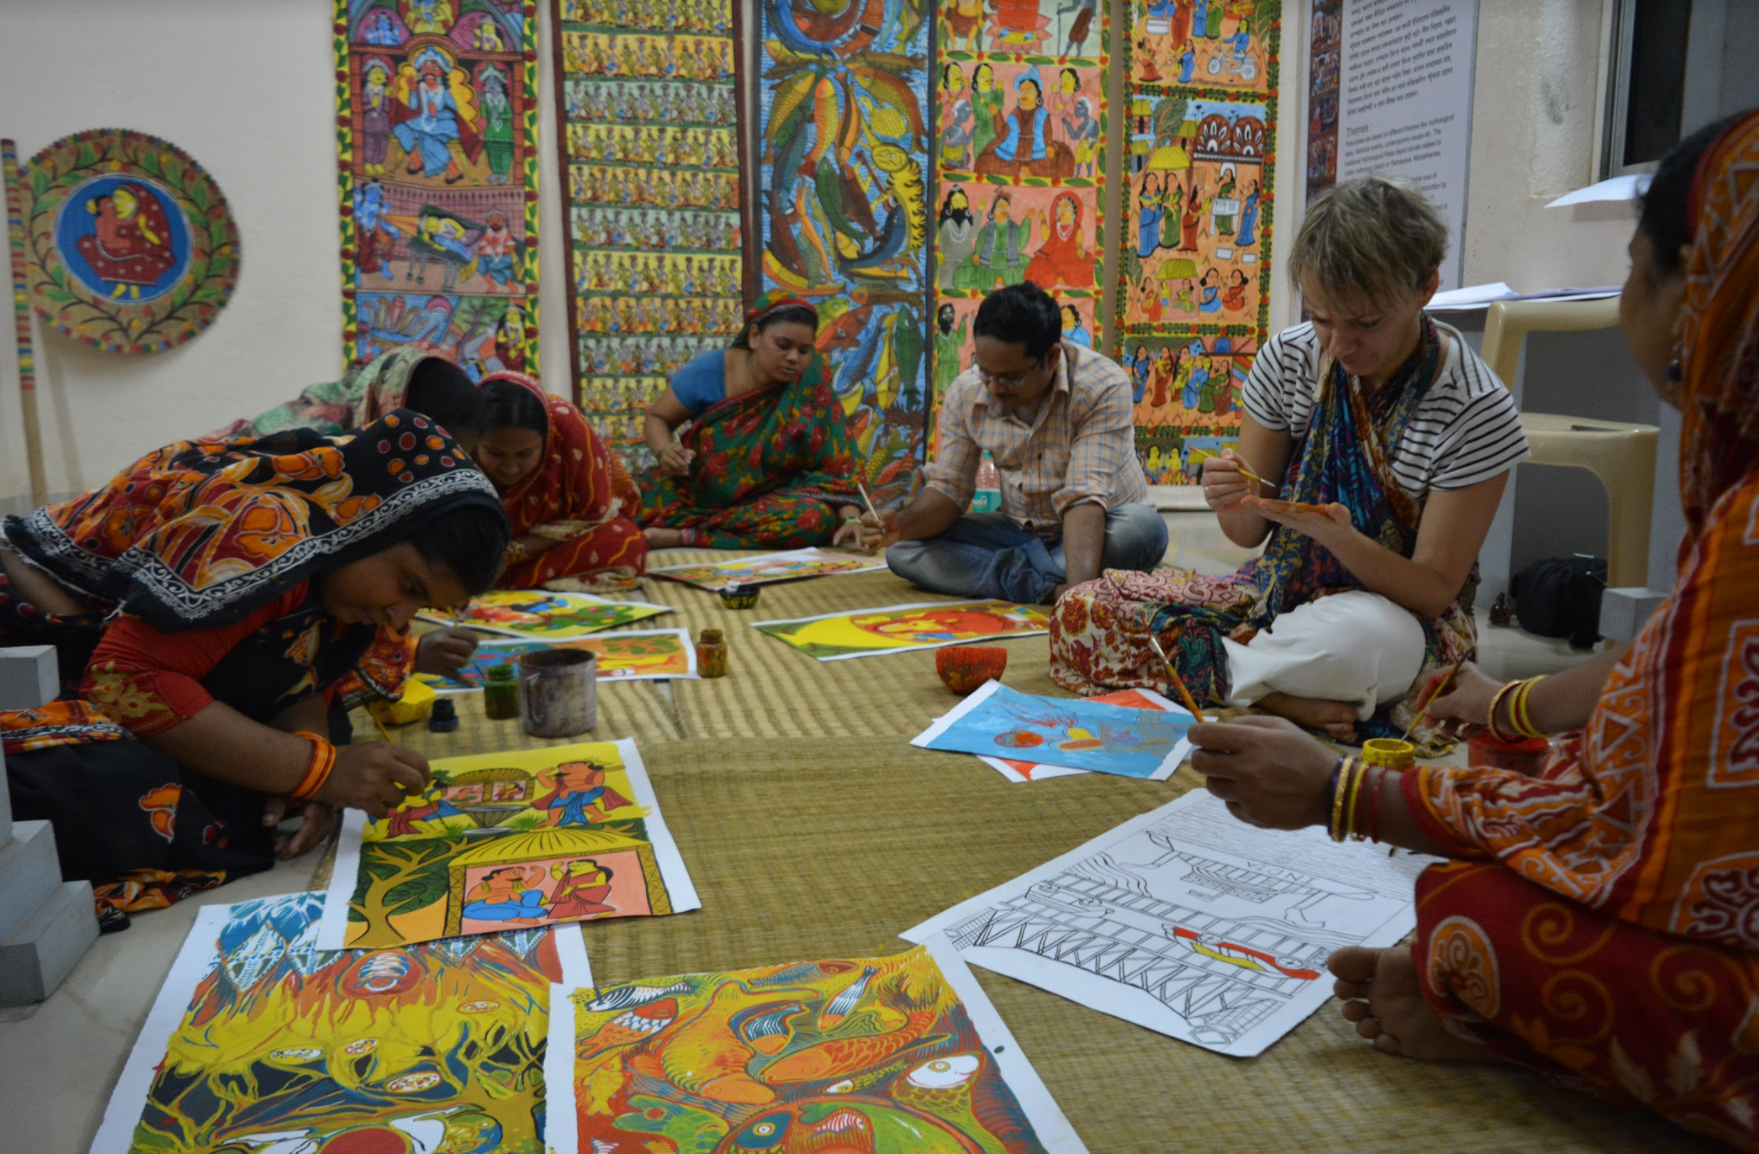 Patachitra workshop at the folk art museum